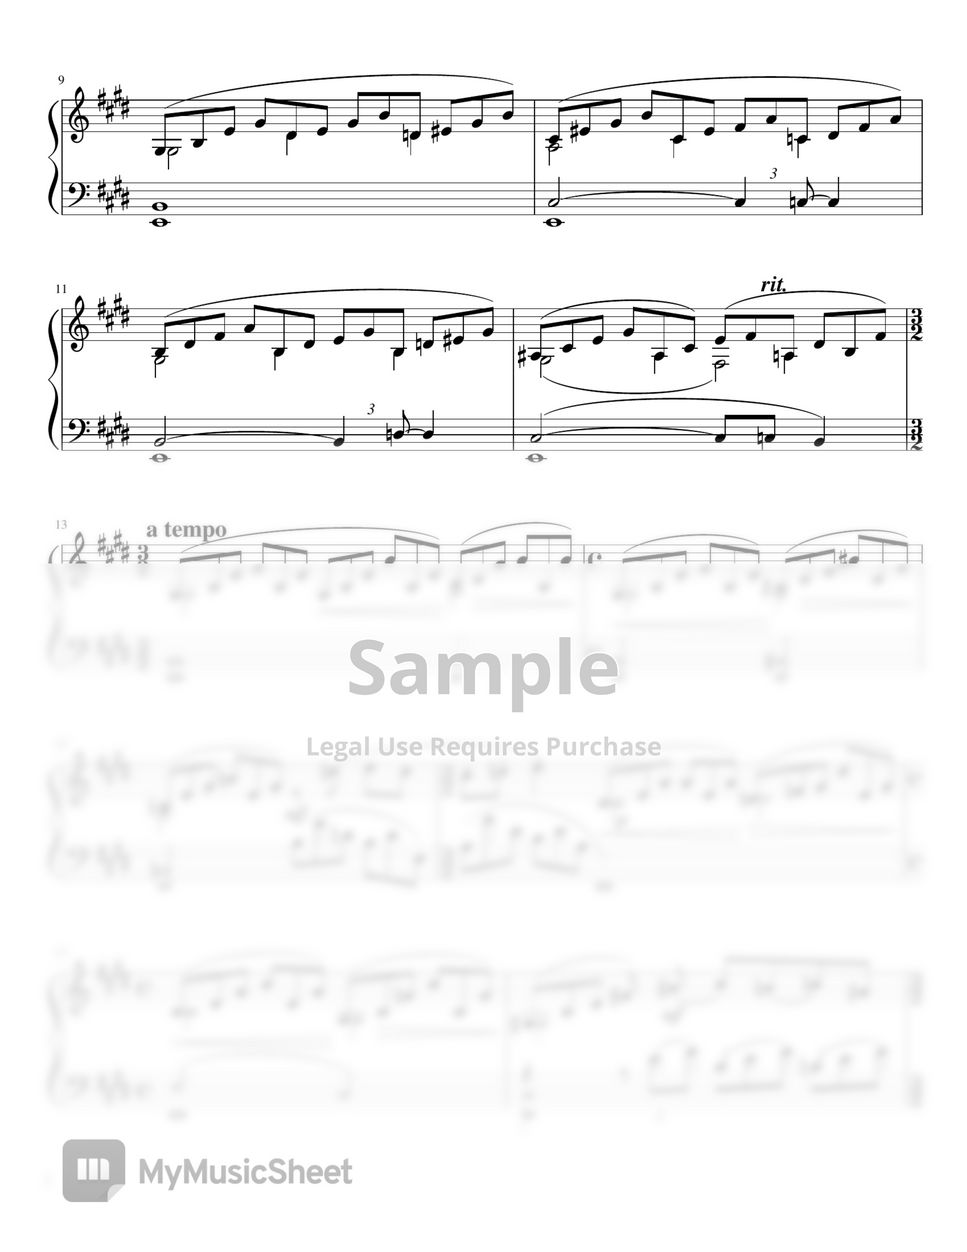 Sergei Rachmaninoff - Piano Concerto No. 2 in C minor Op. 18 (Rachmaninoff - Piano Concerto No. 2 in C minor - Op. 18 - 2nd Mvmt - For Piano Solo Original) by poon